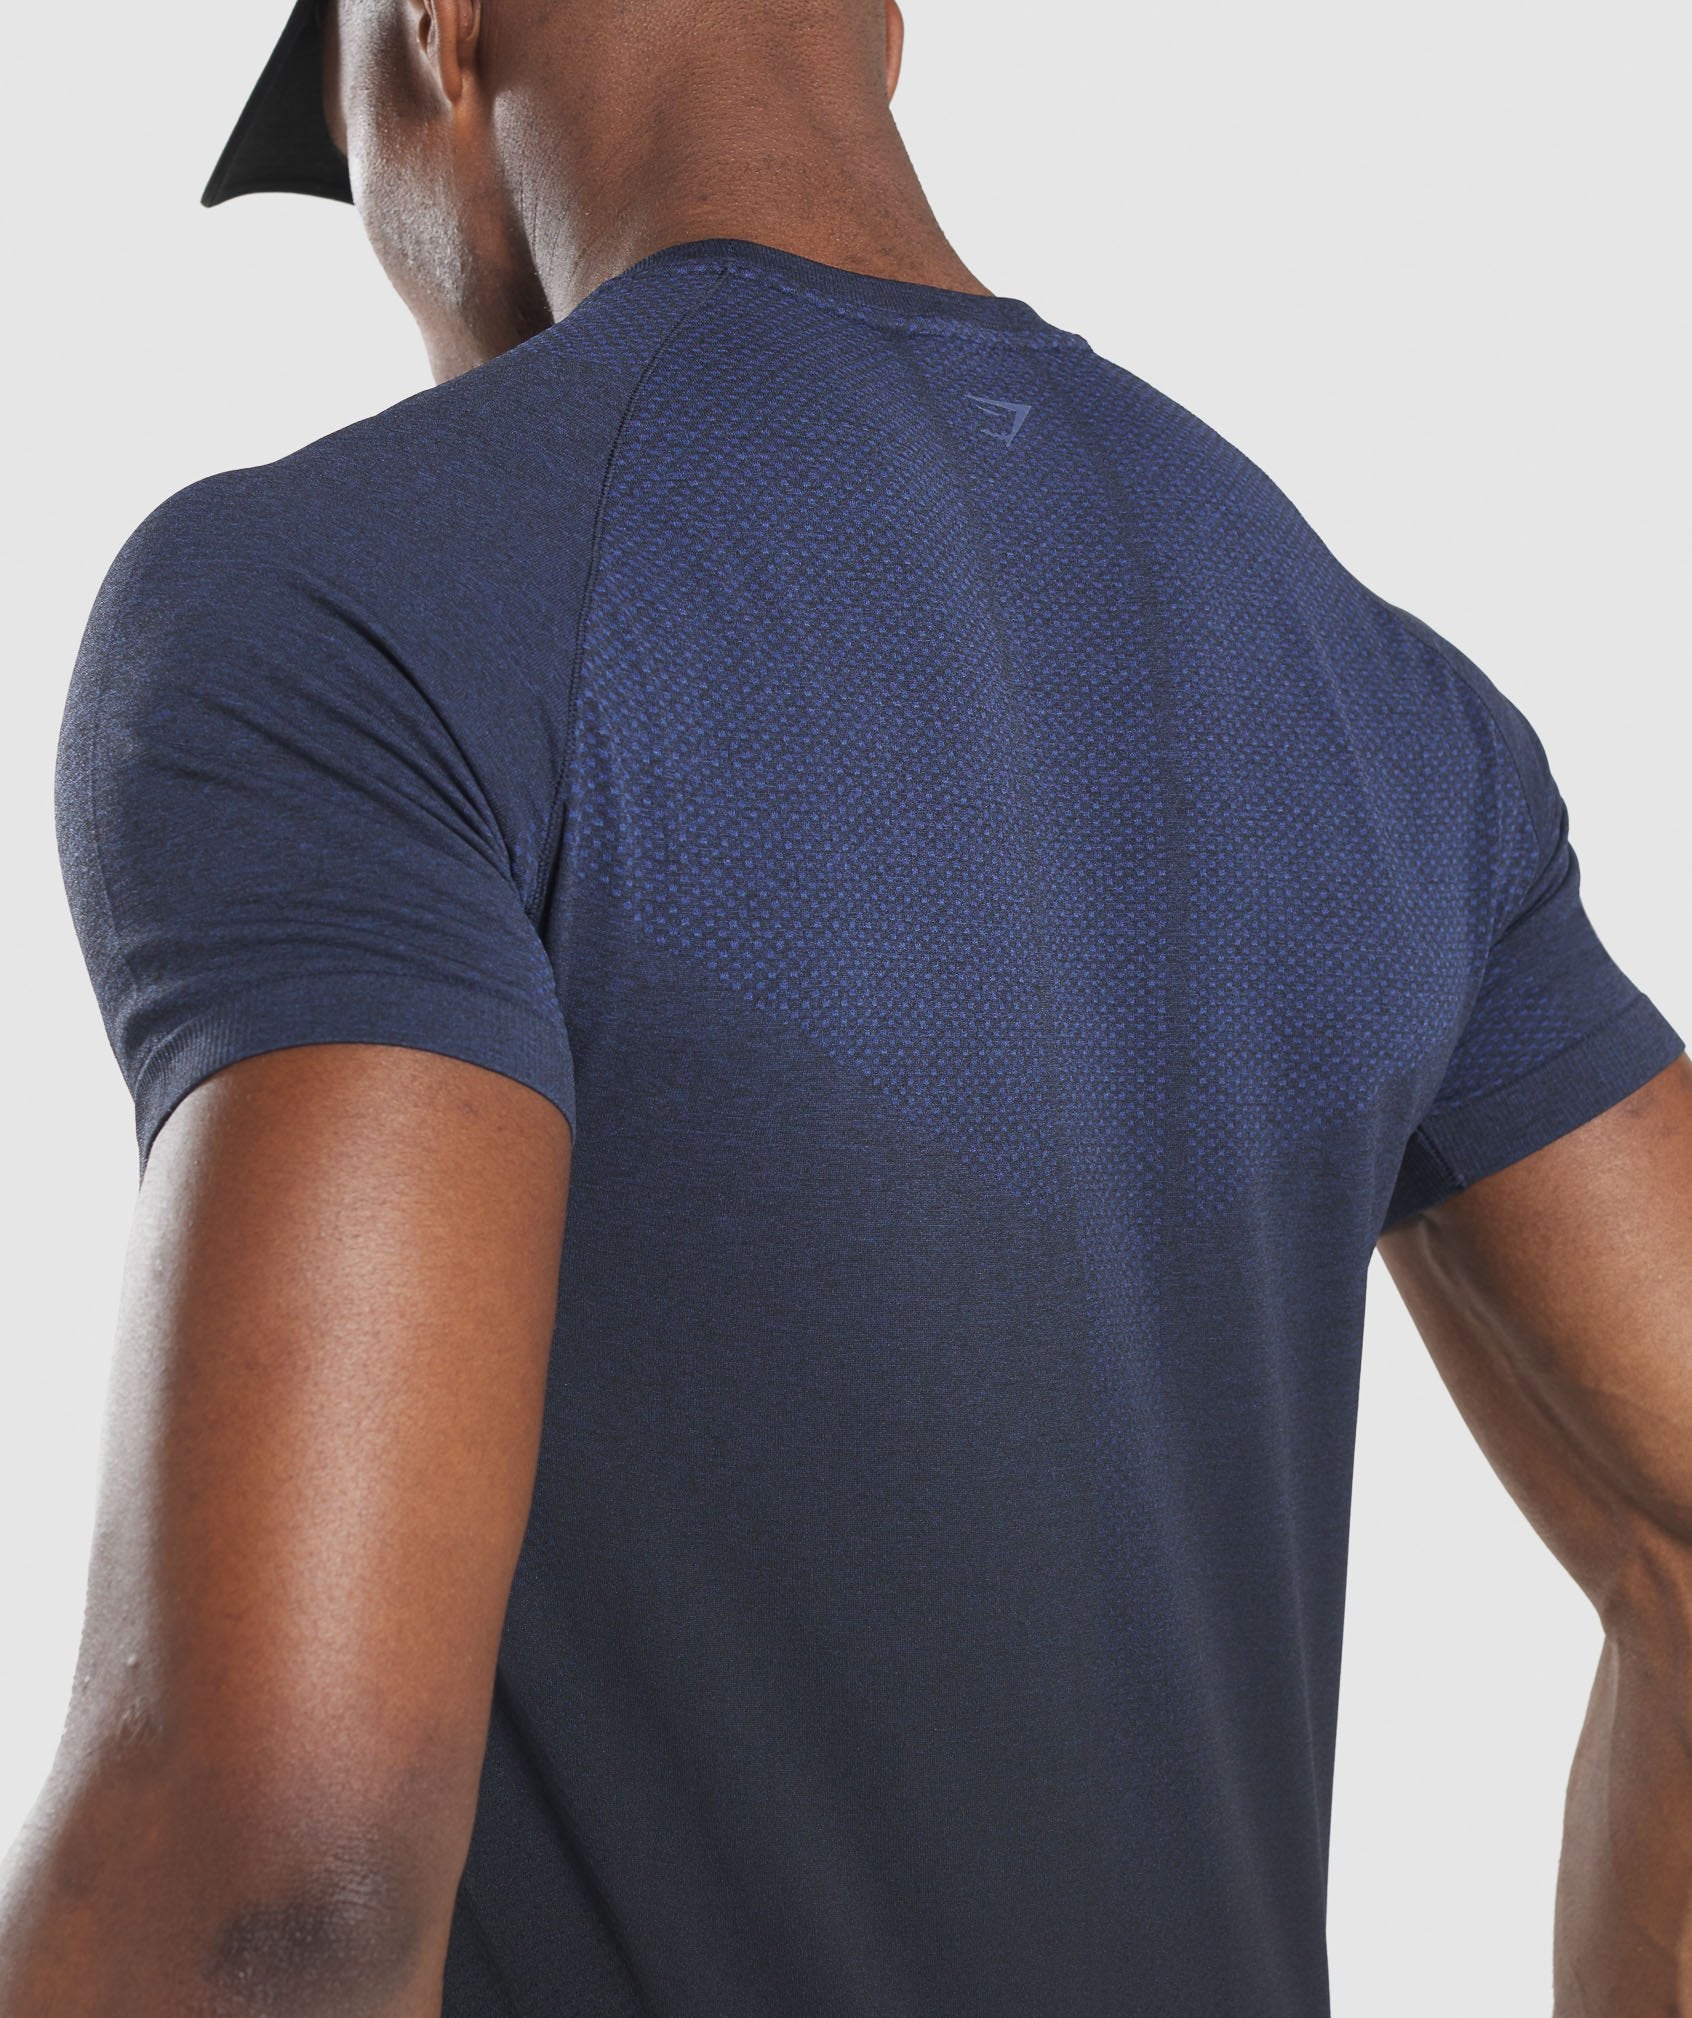 Vital Ombre Seamless T-Shirt in Black/Dark Blue - view 7